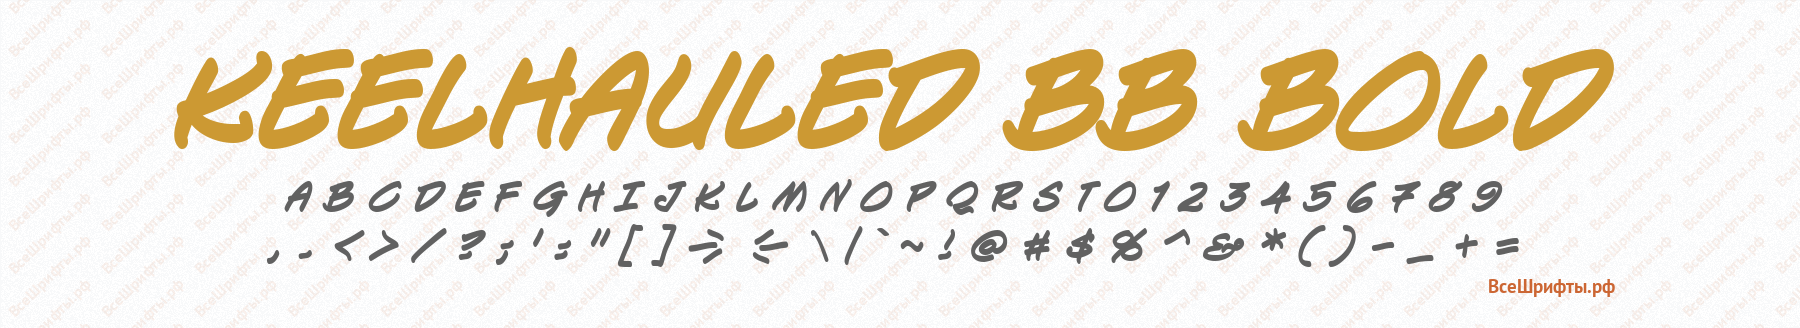 Шрифт Keelhauled BB Bold